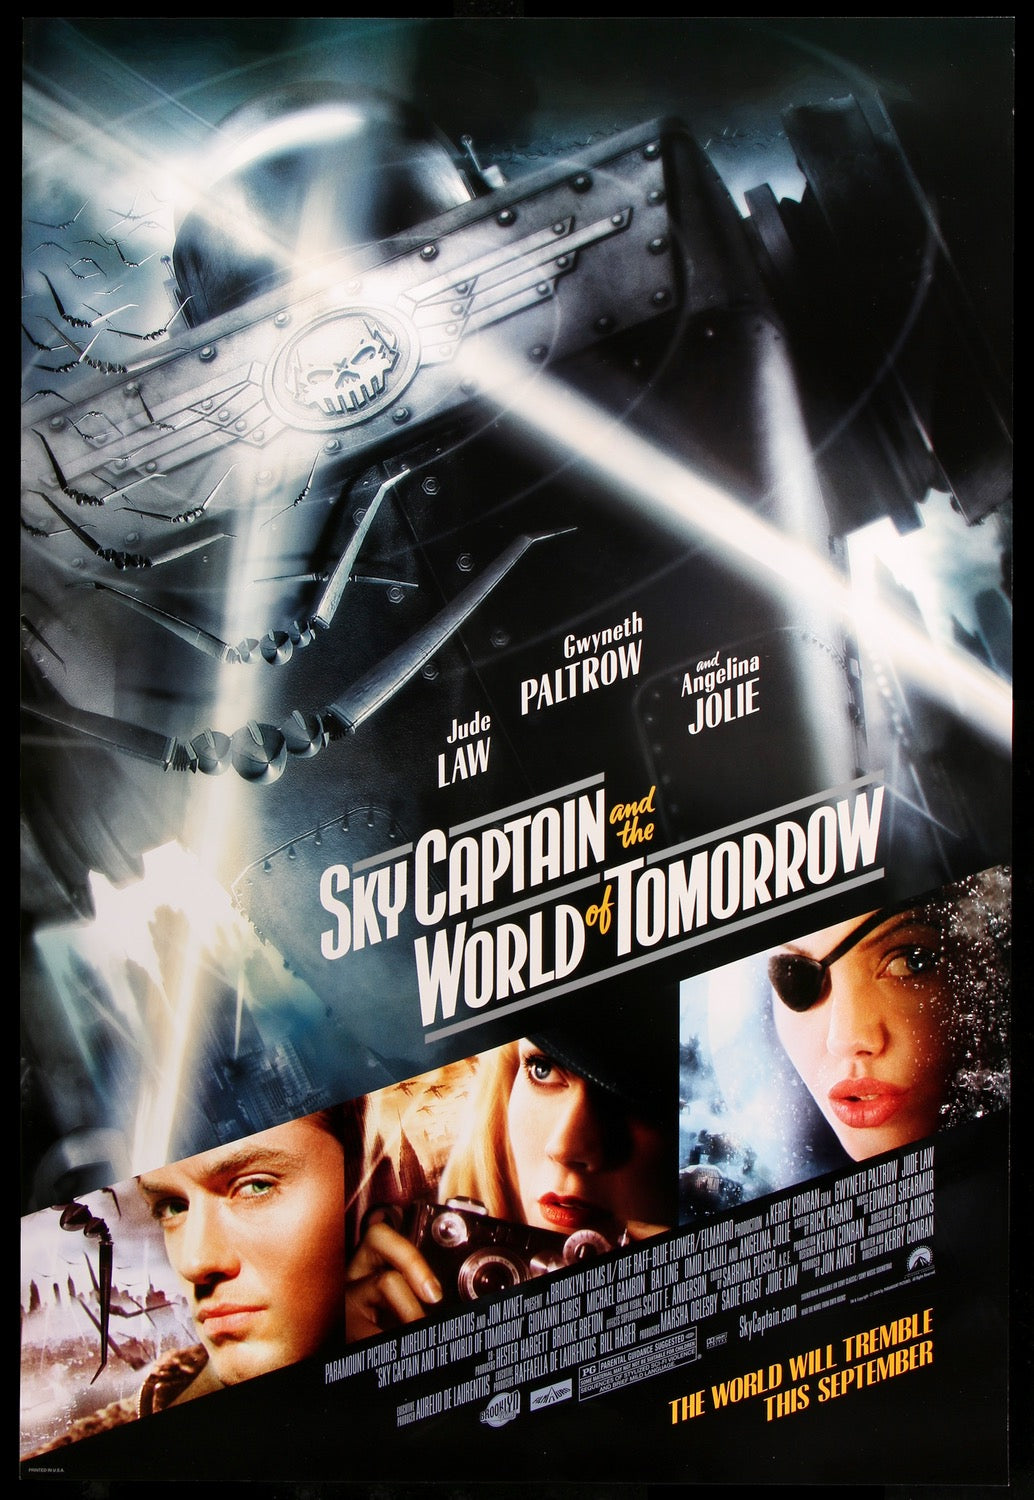 Sky Captain and the World of Tomorrow (2004) original movie poster for sale at Original Film Art